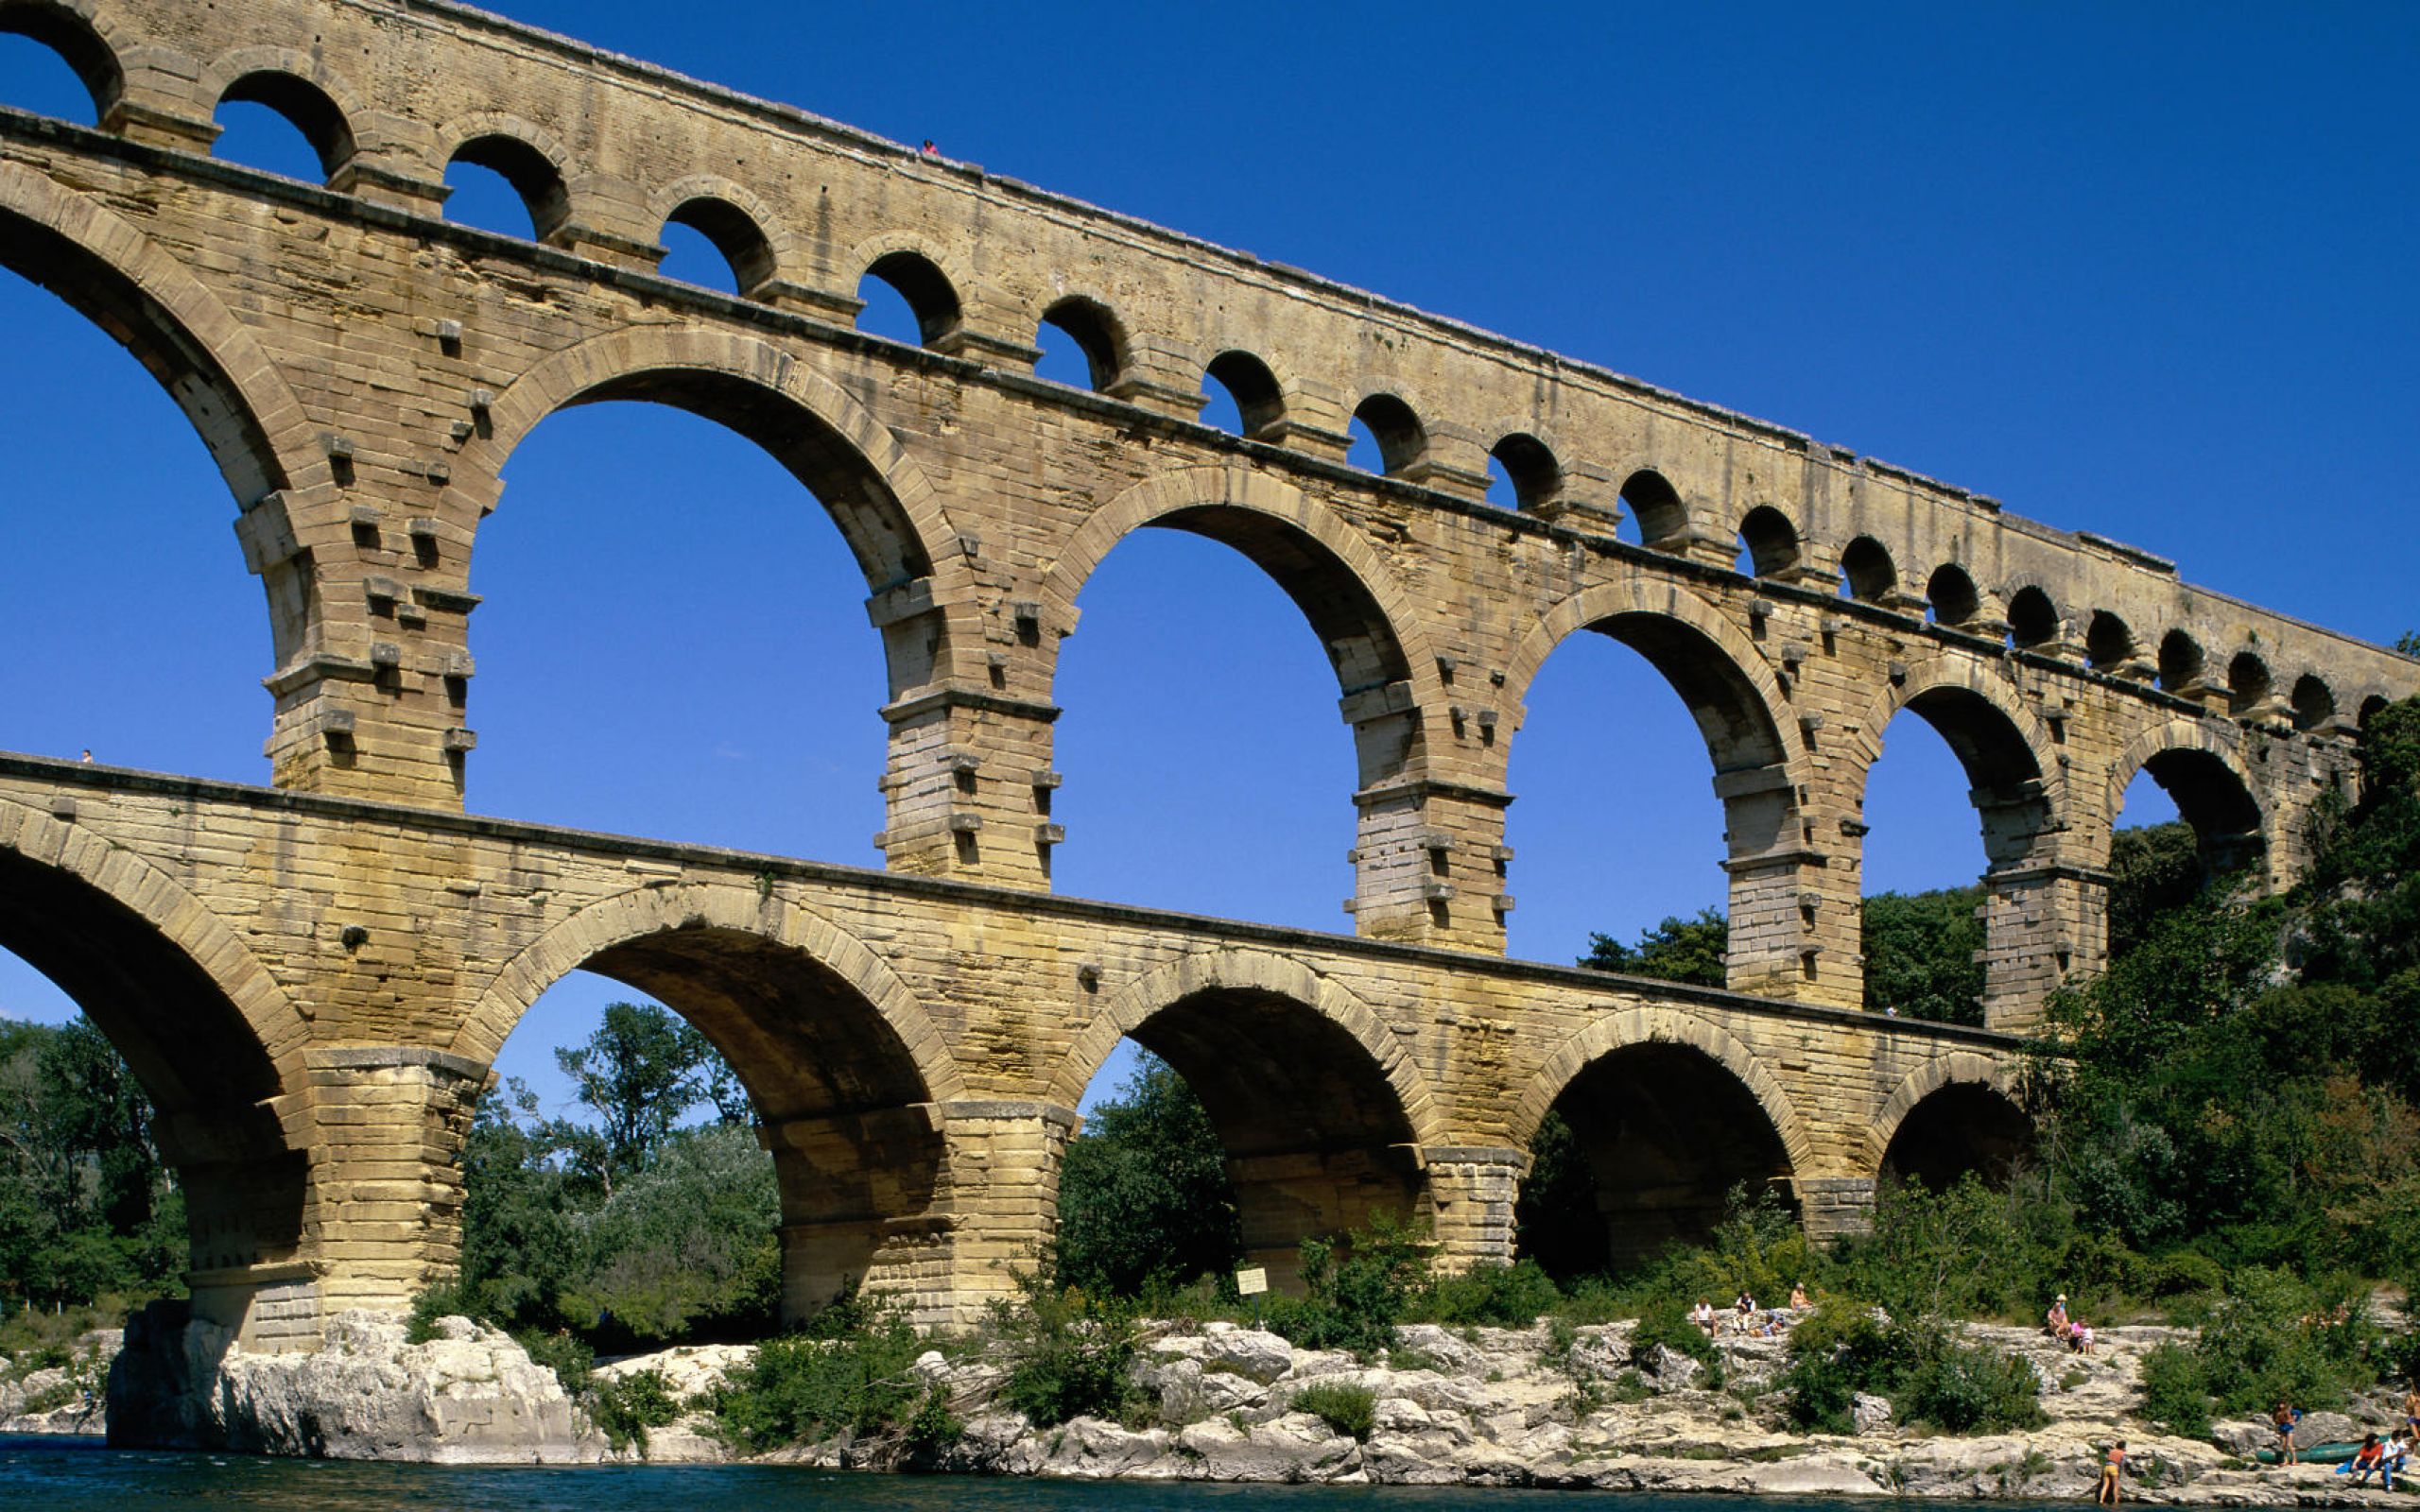 Пон качество. Пон-дю-гар во Франции. Римский акведук. Акведук Пон-дю-гар древний Рим. Мост Пон дю гар во Франции. Гардский мост Франция.